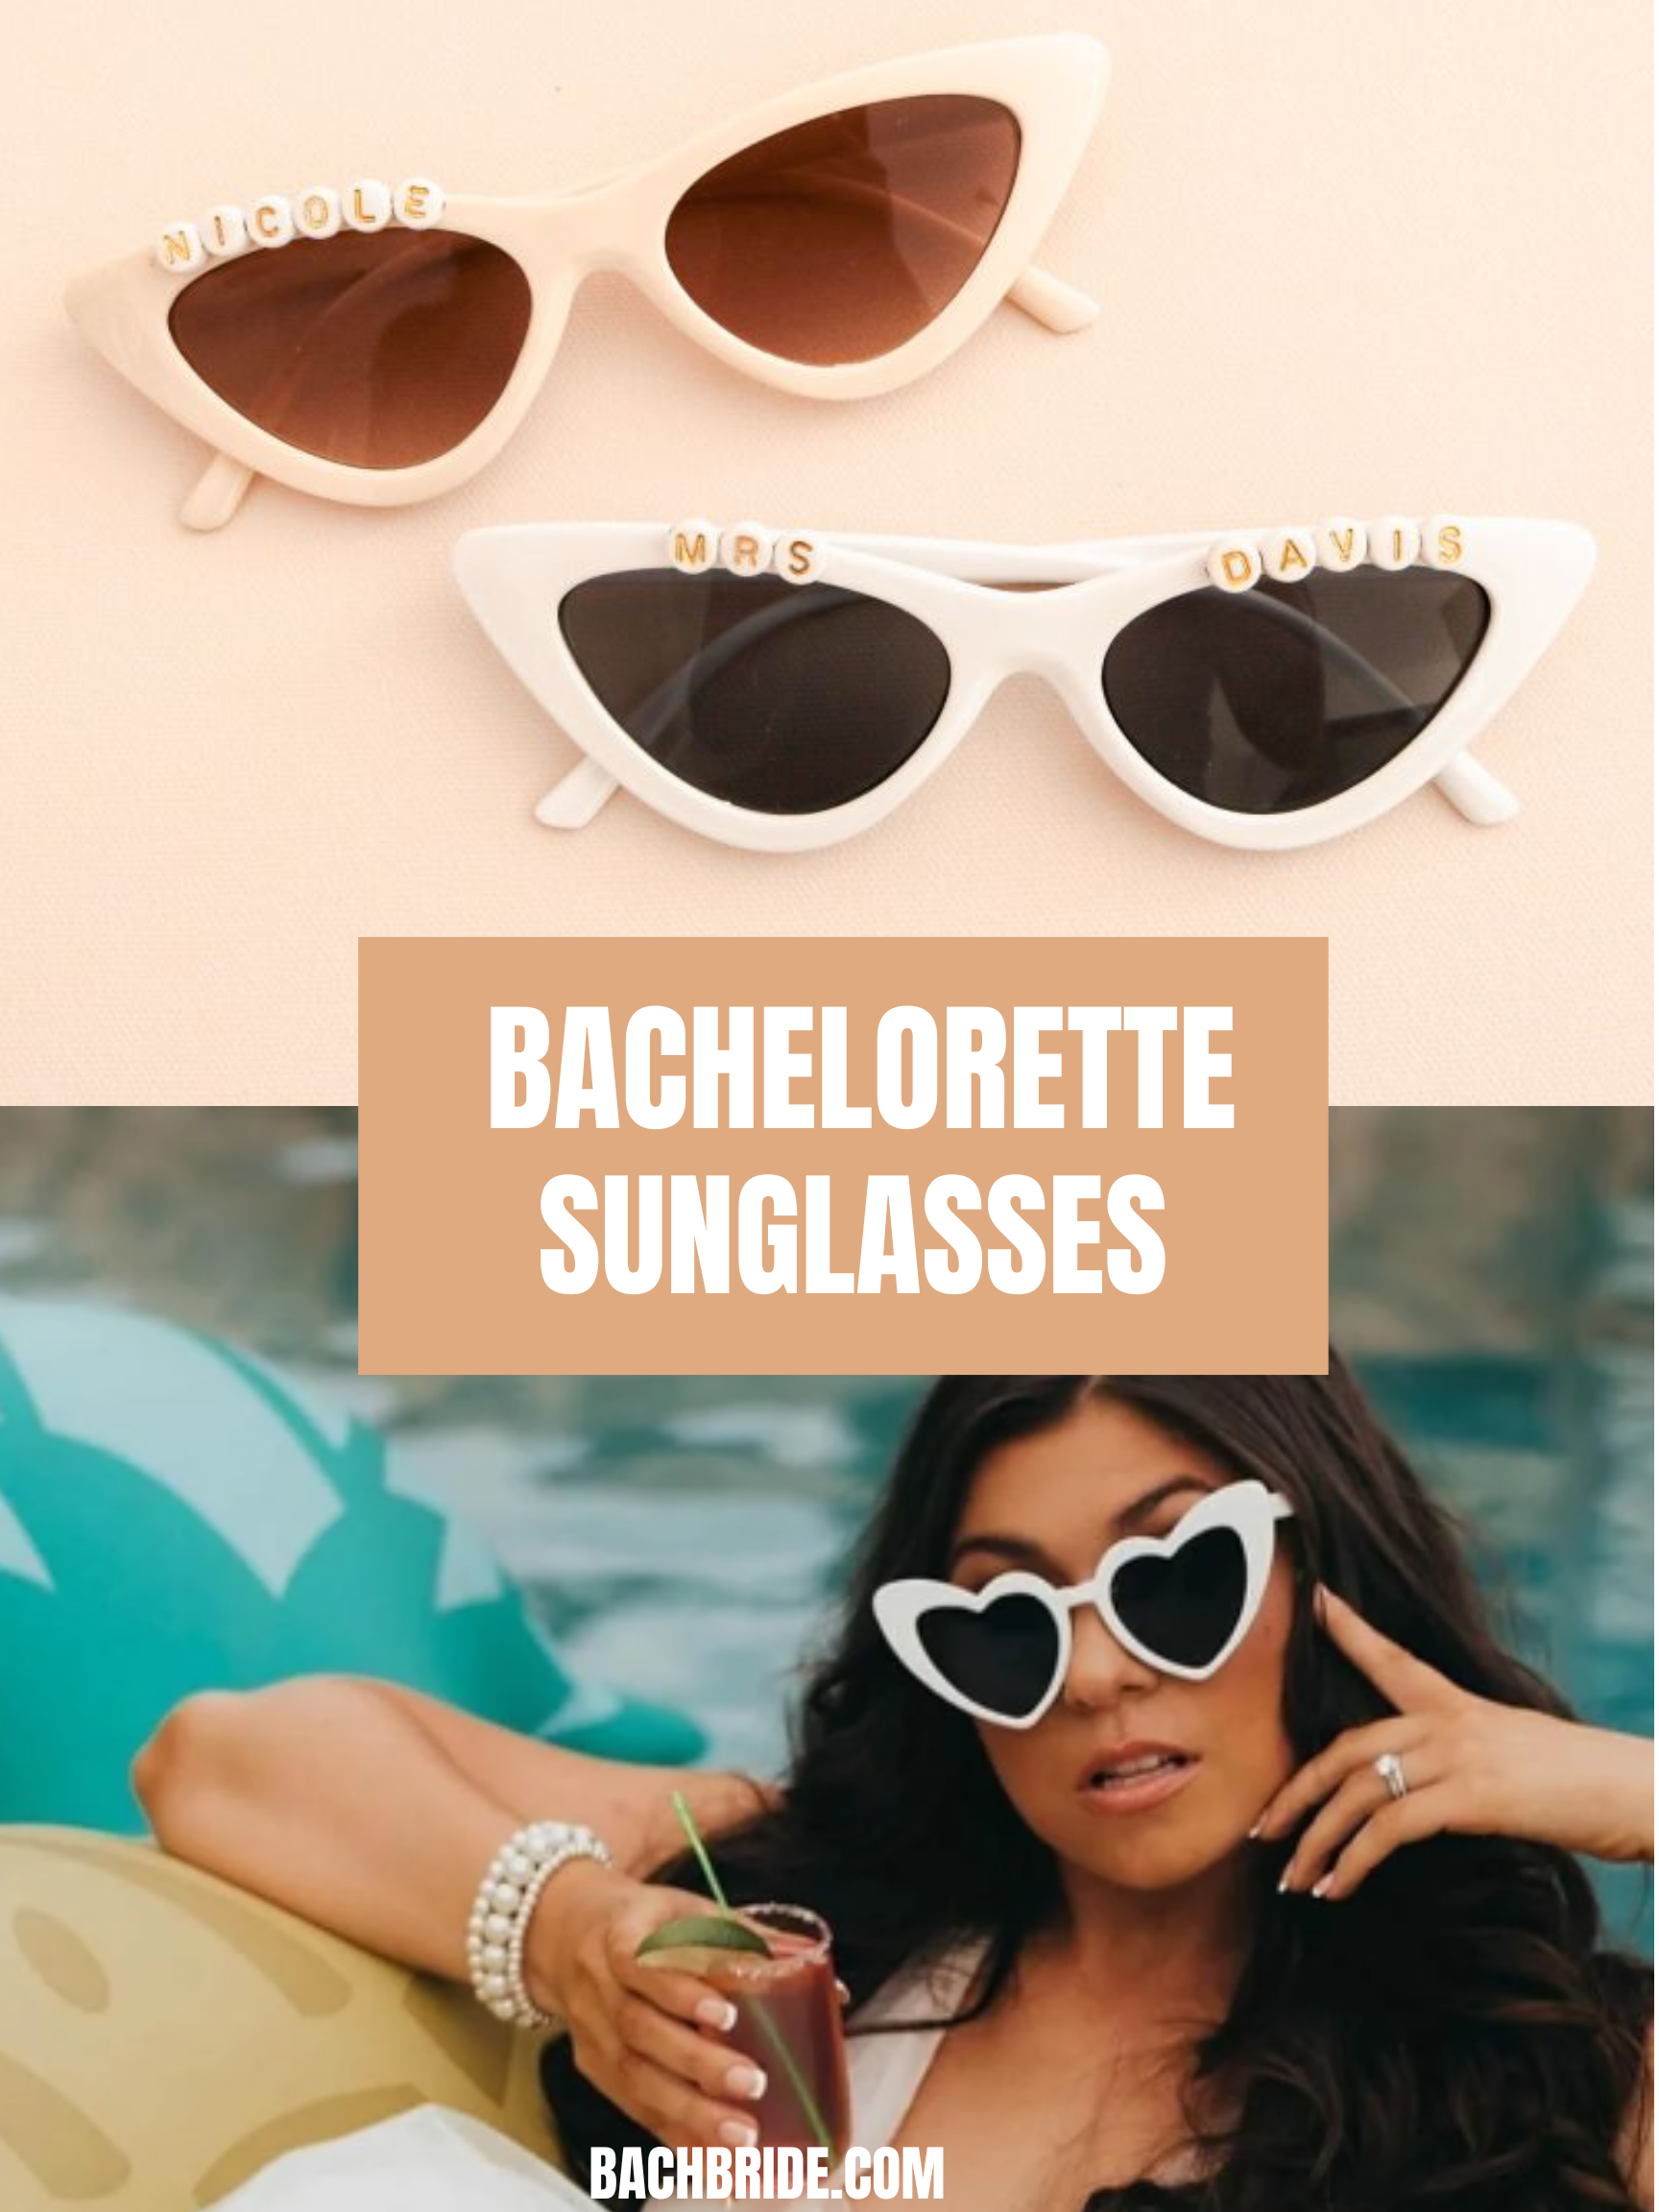 Bachelorette sunglasses